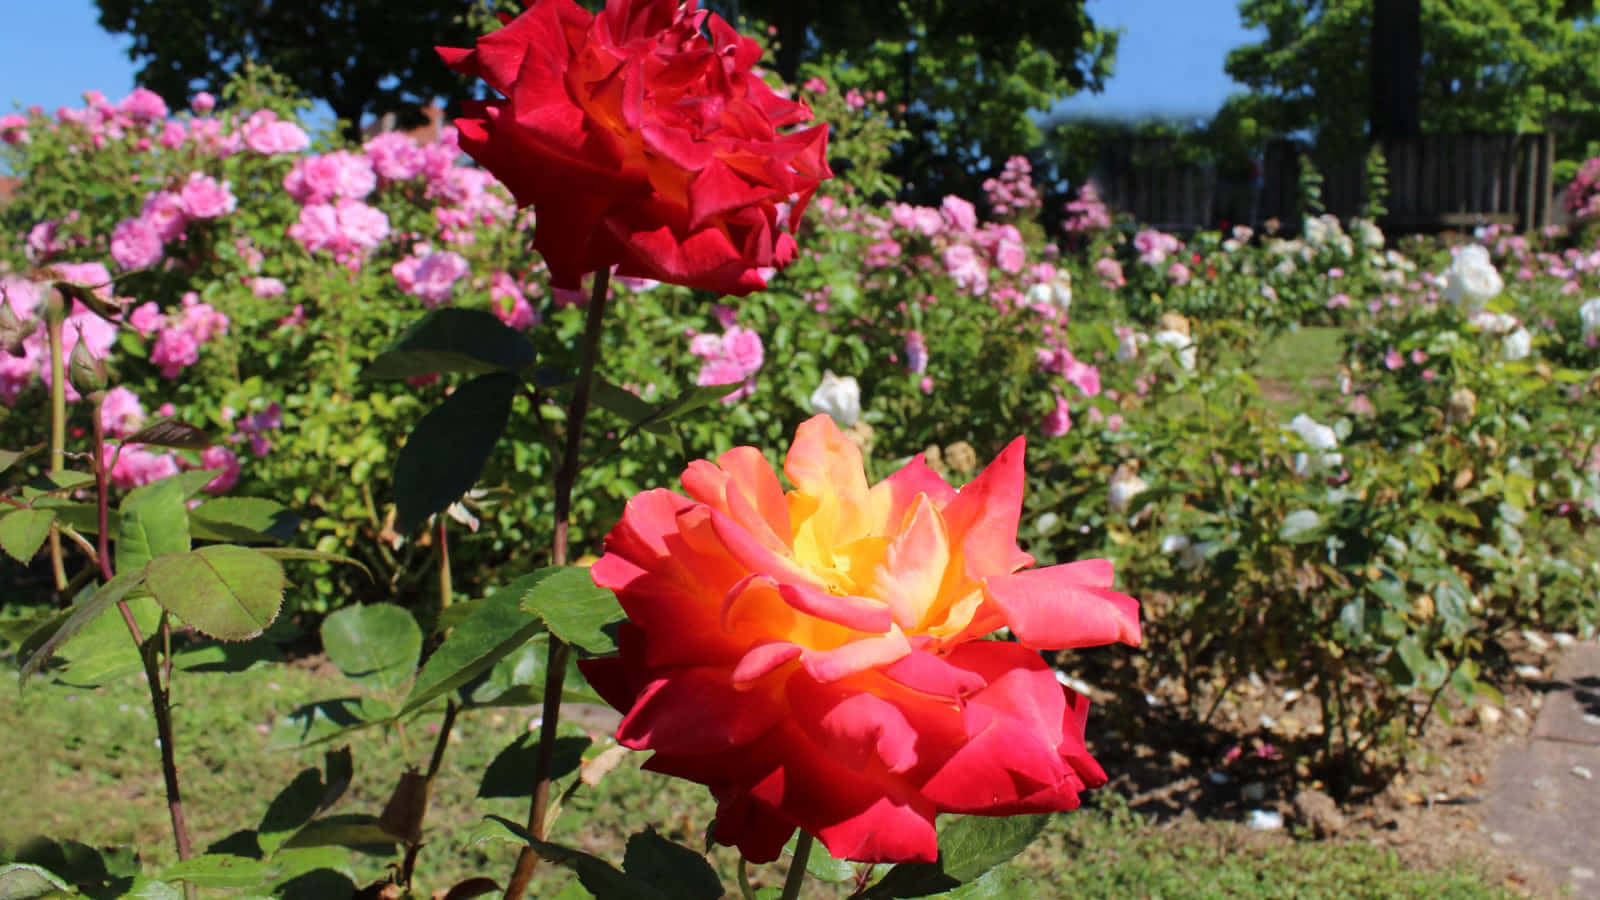 Enjoy the beauty of lush rose garden